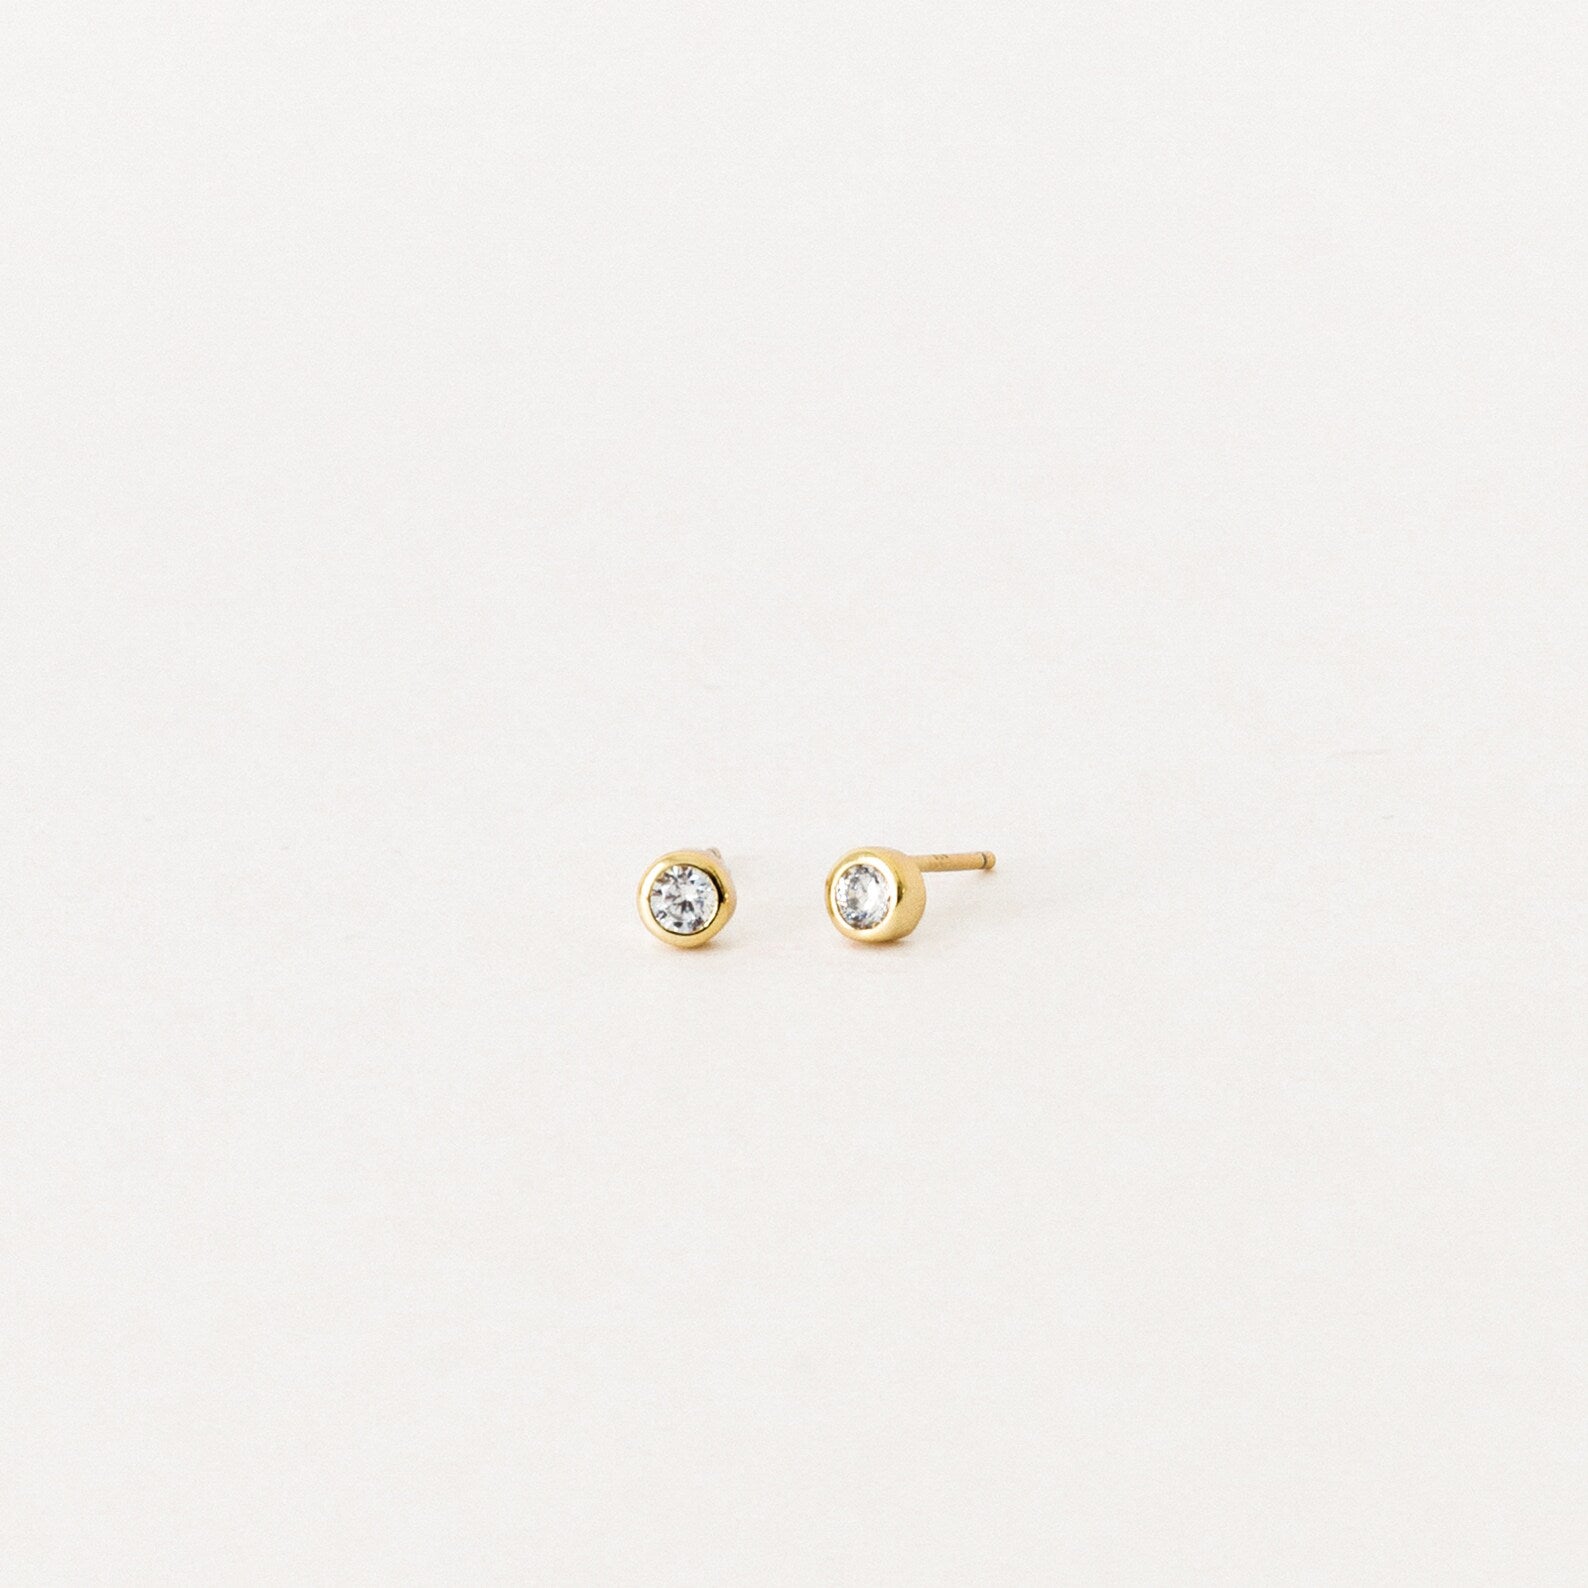 18ct White Gold Diamond Princess Cut Single Stone Earrings 0.30 2201949 -  Jewellery from Arthur Kay & Bro UK